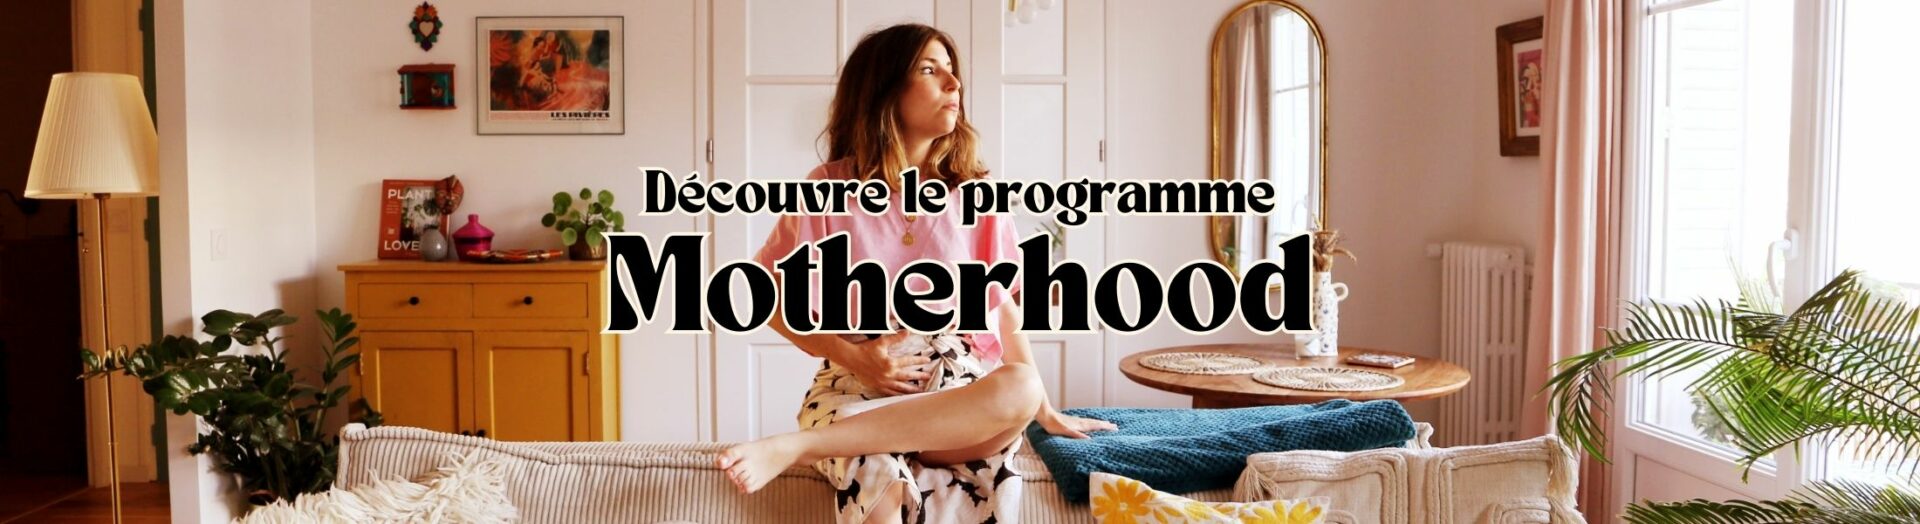 header_motherhood